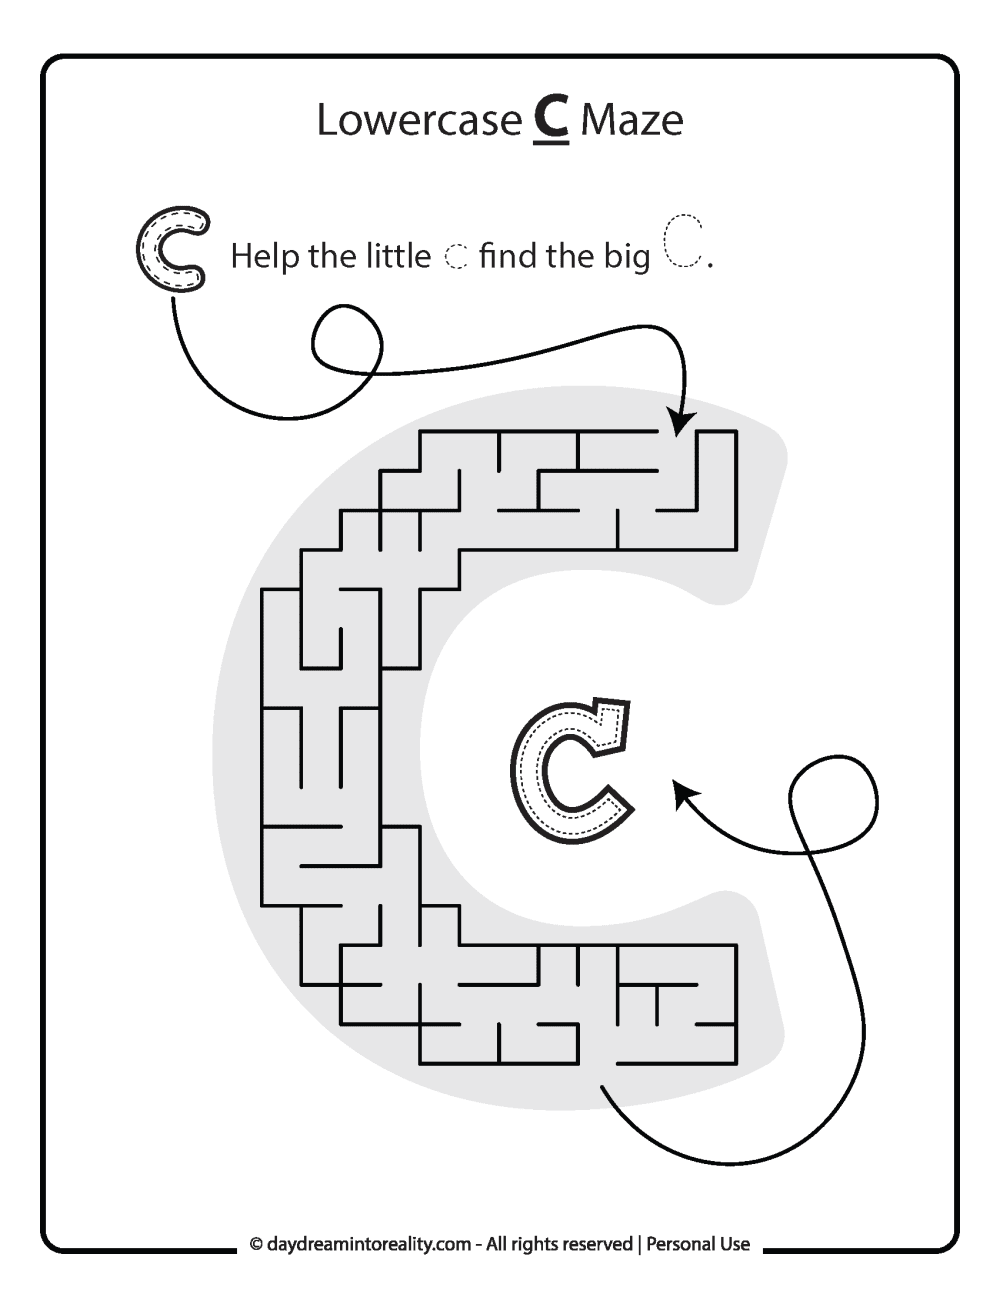 Lowercase "c" Maze Free Printable